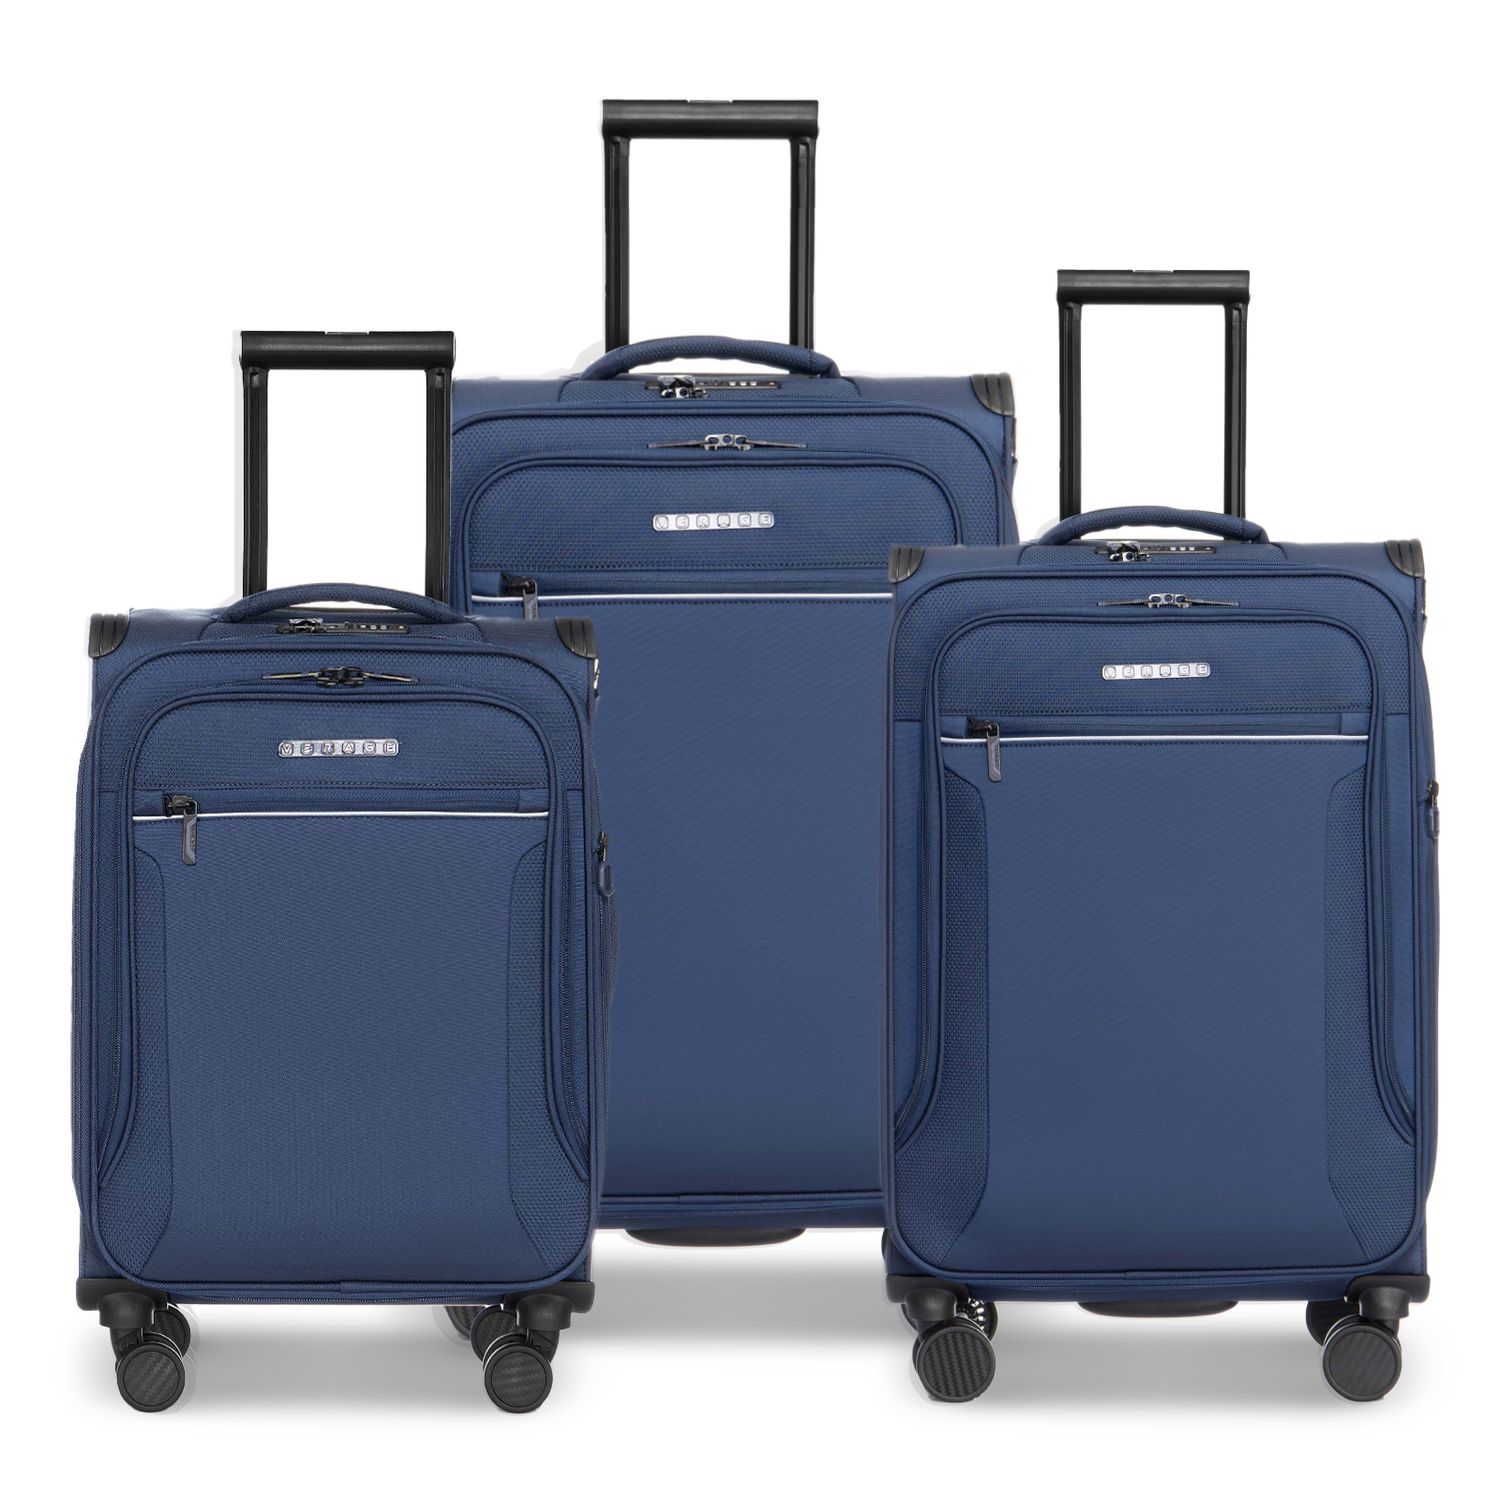 Cheap 3 piece luggage set